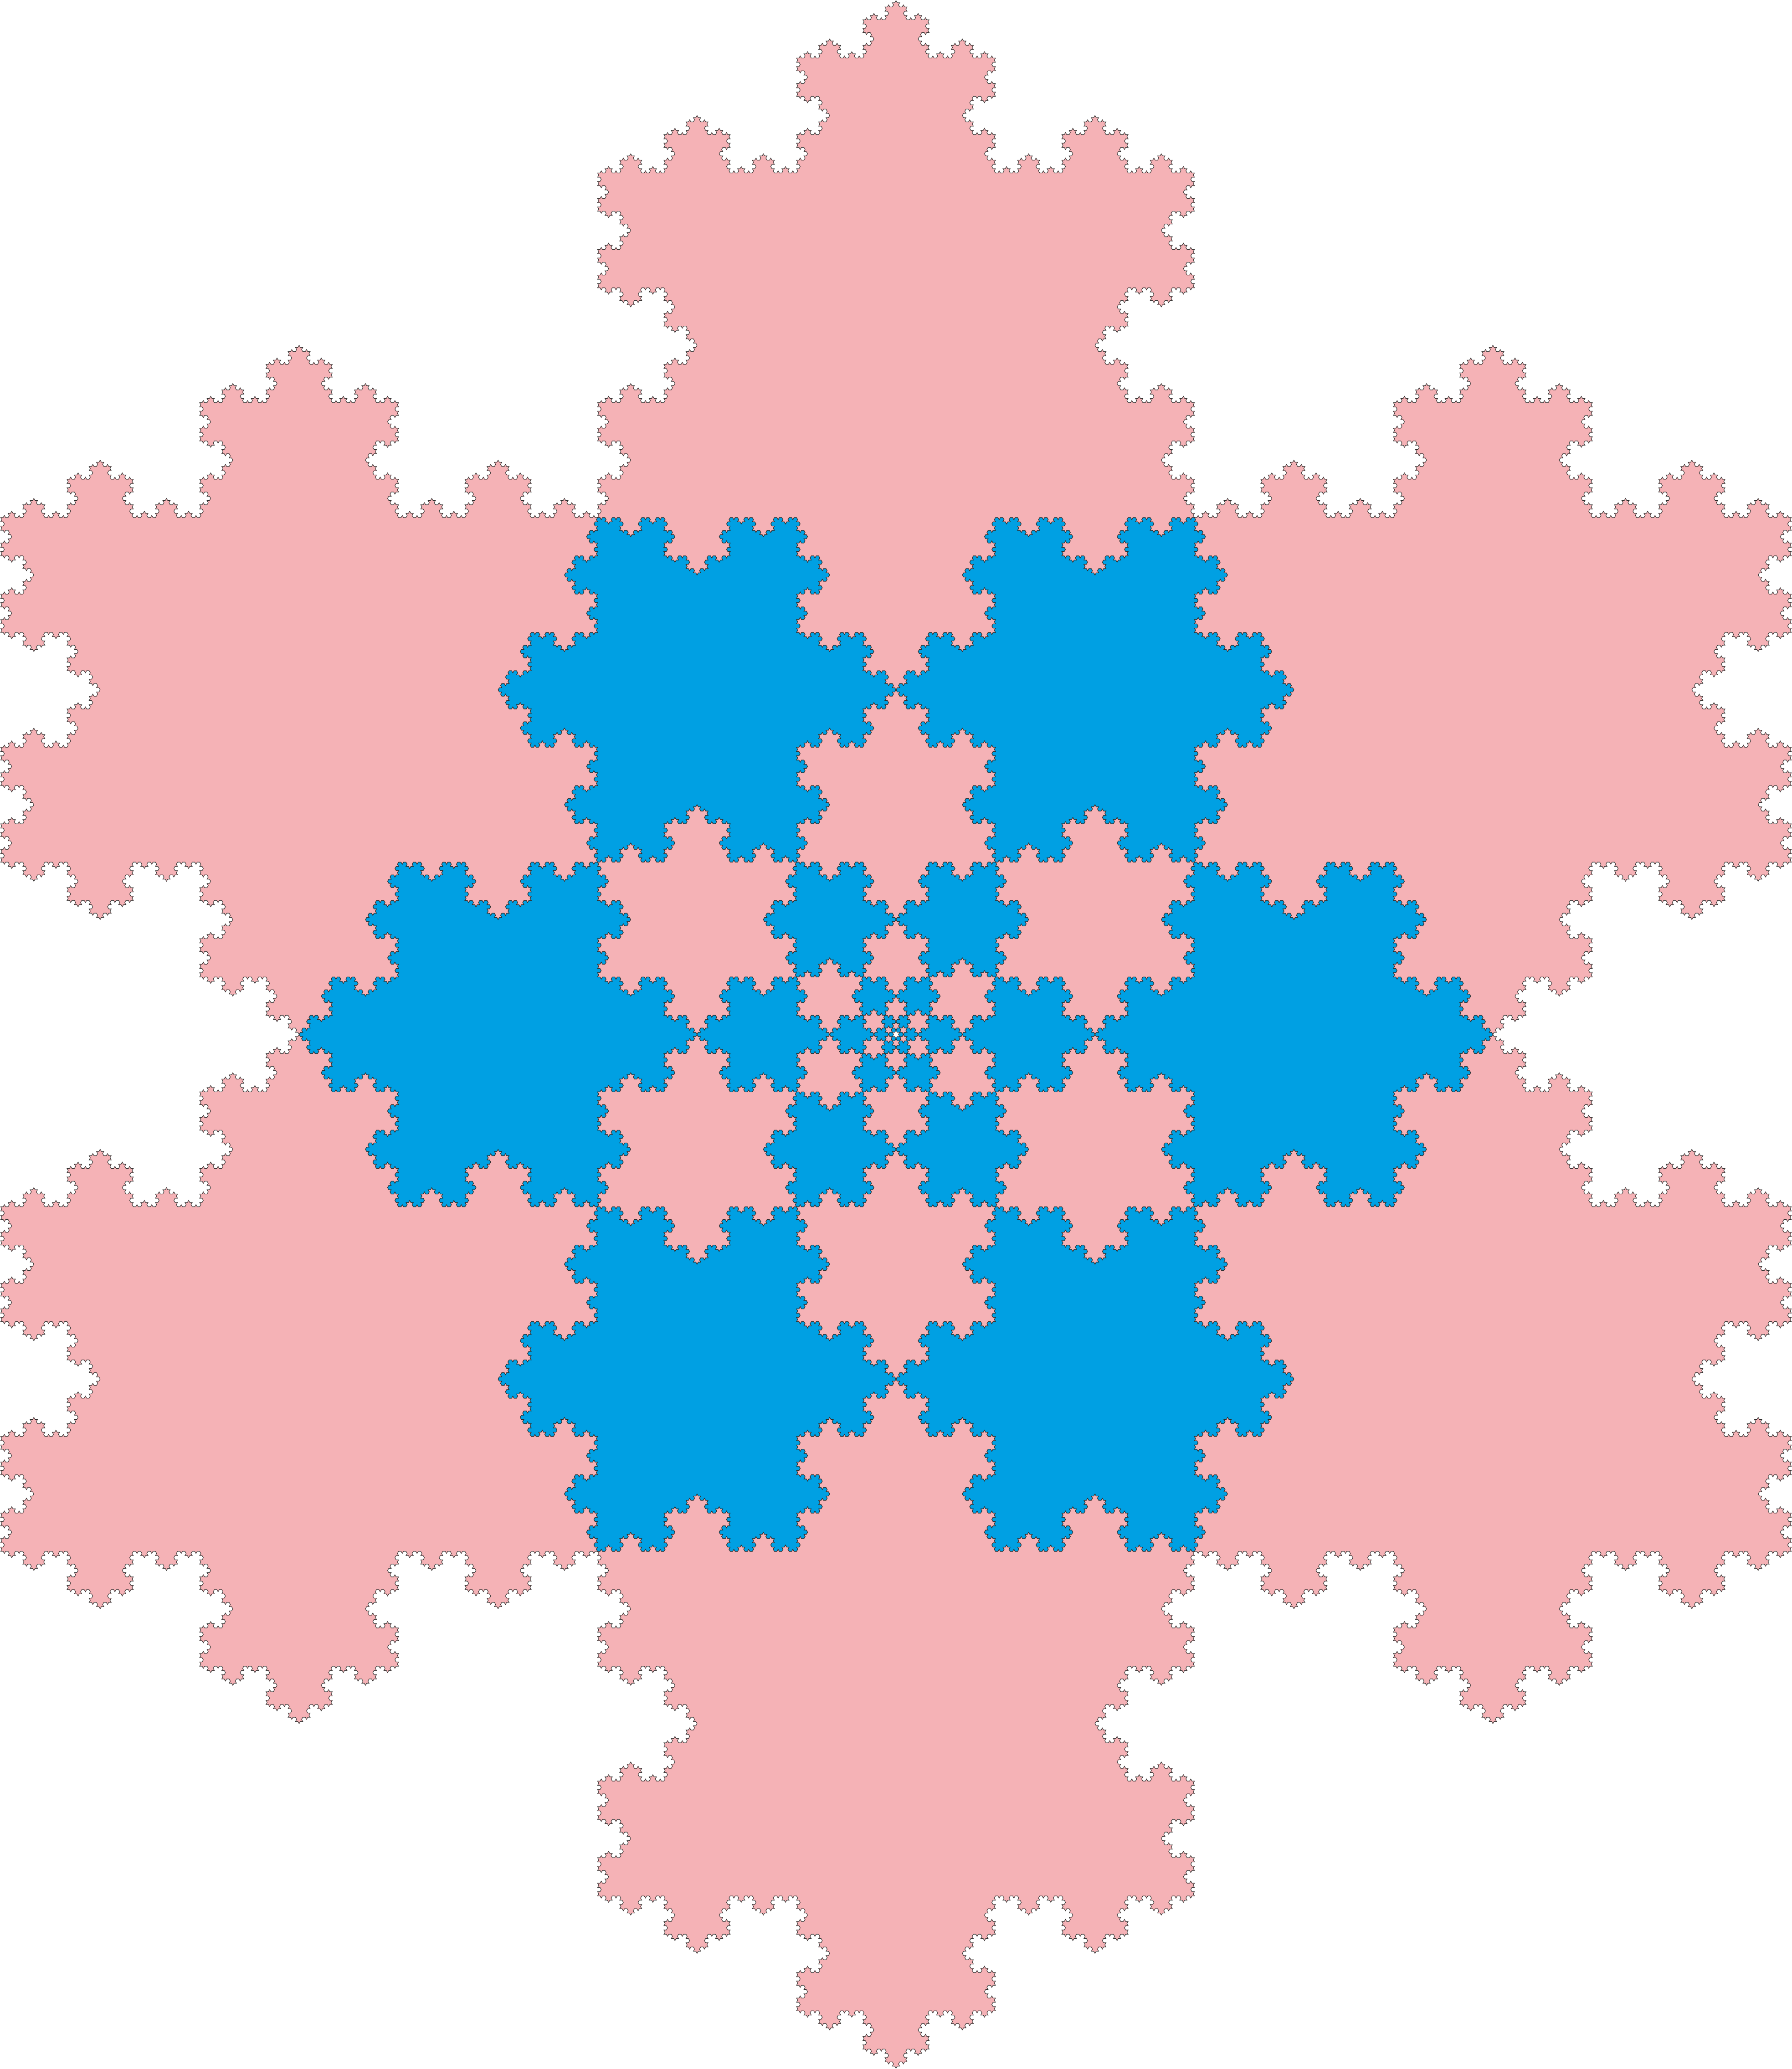 Koch hexagons 2